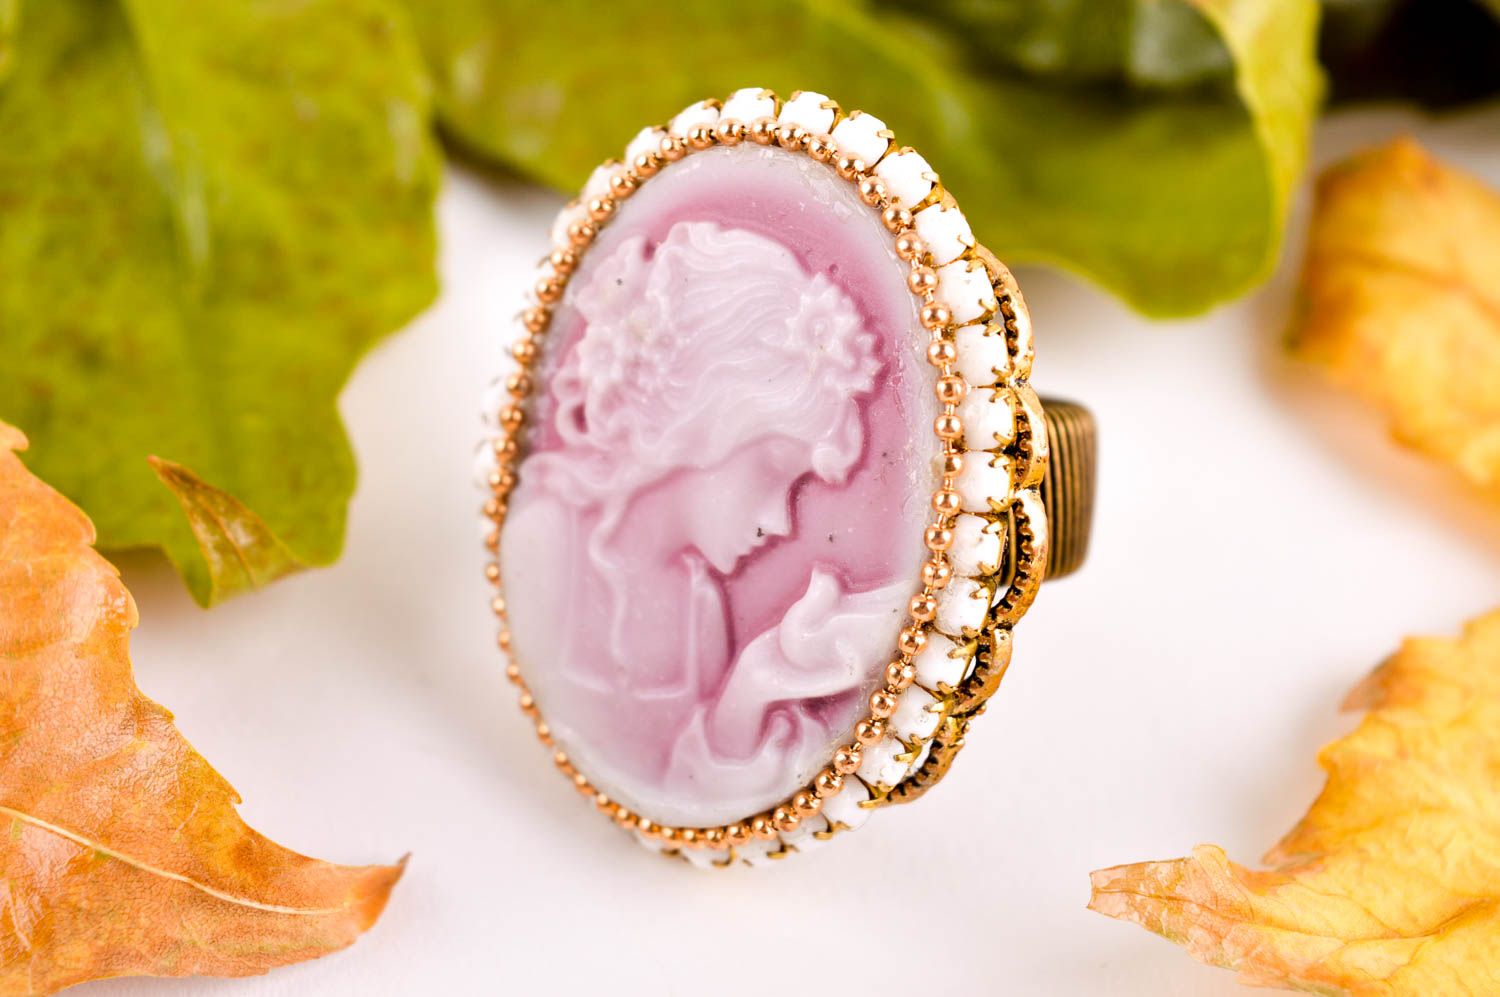 Handmade ring designer ring unusual ring with stone beautiful jewelry gift ideas photo 1